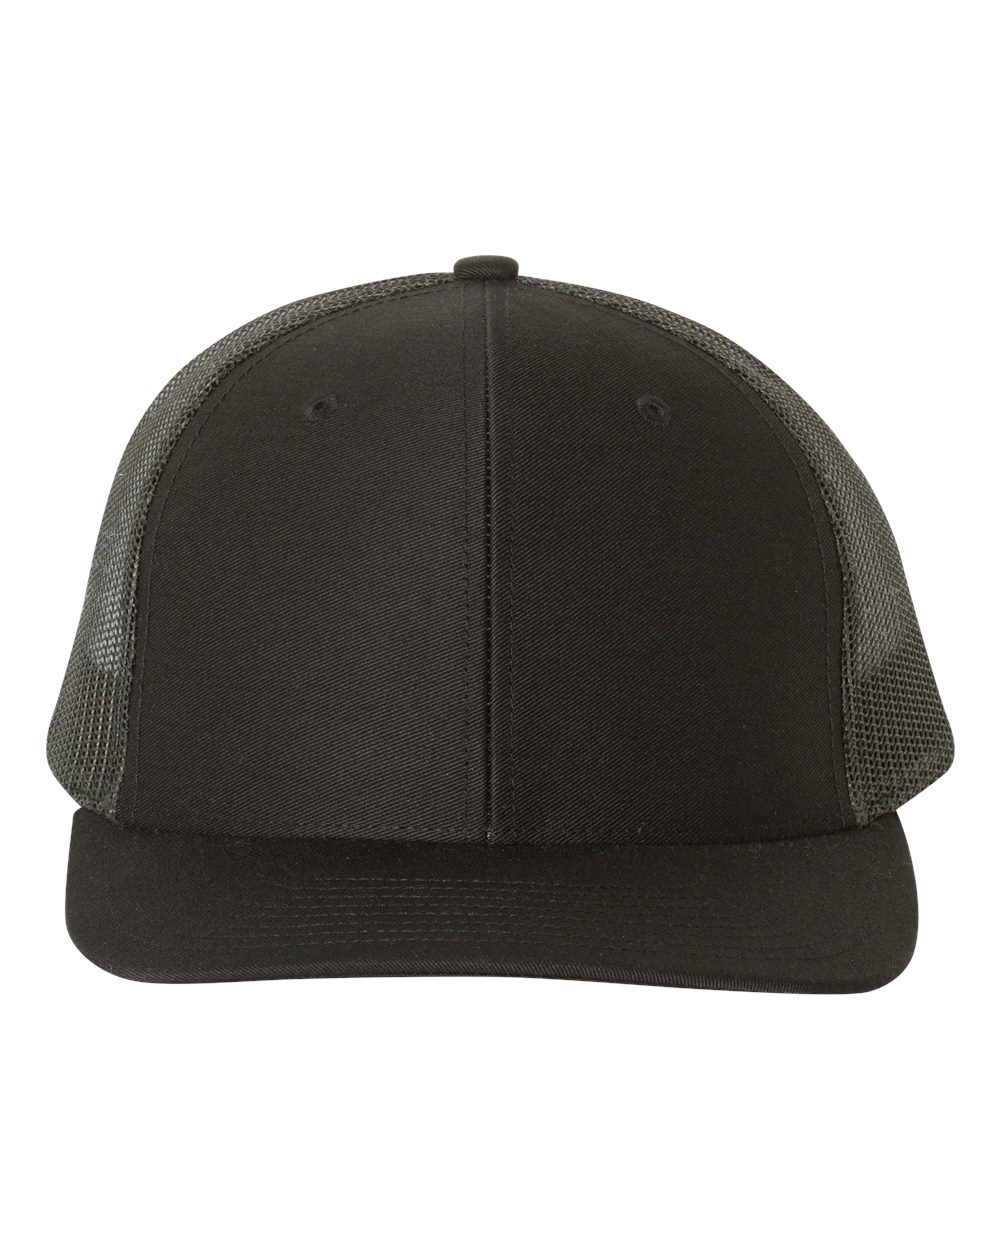 Custom Leather Patch Richardson 112 Hats